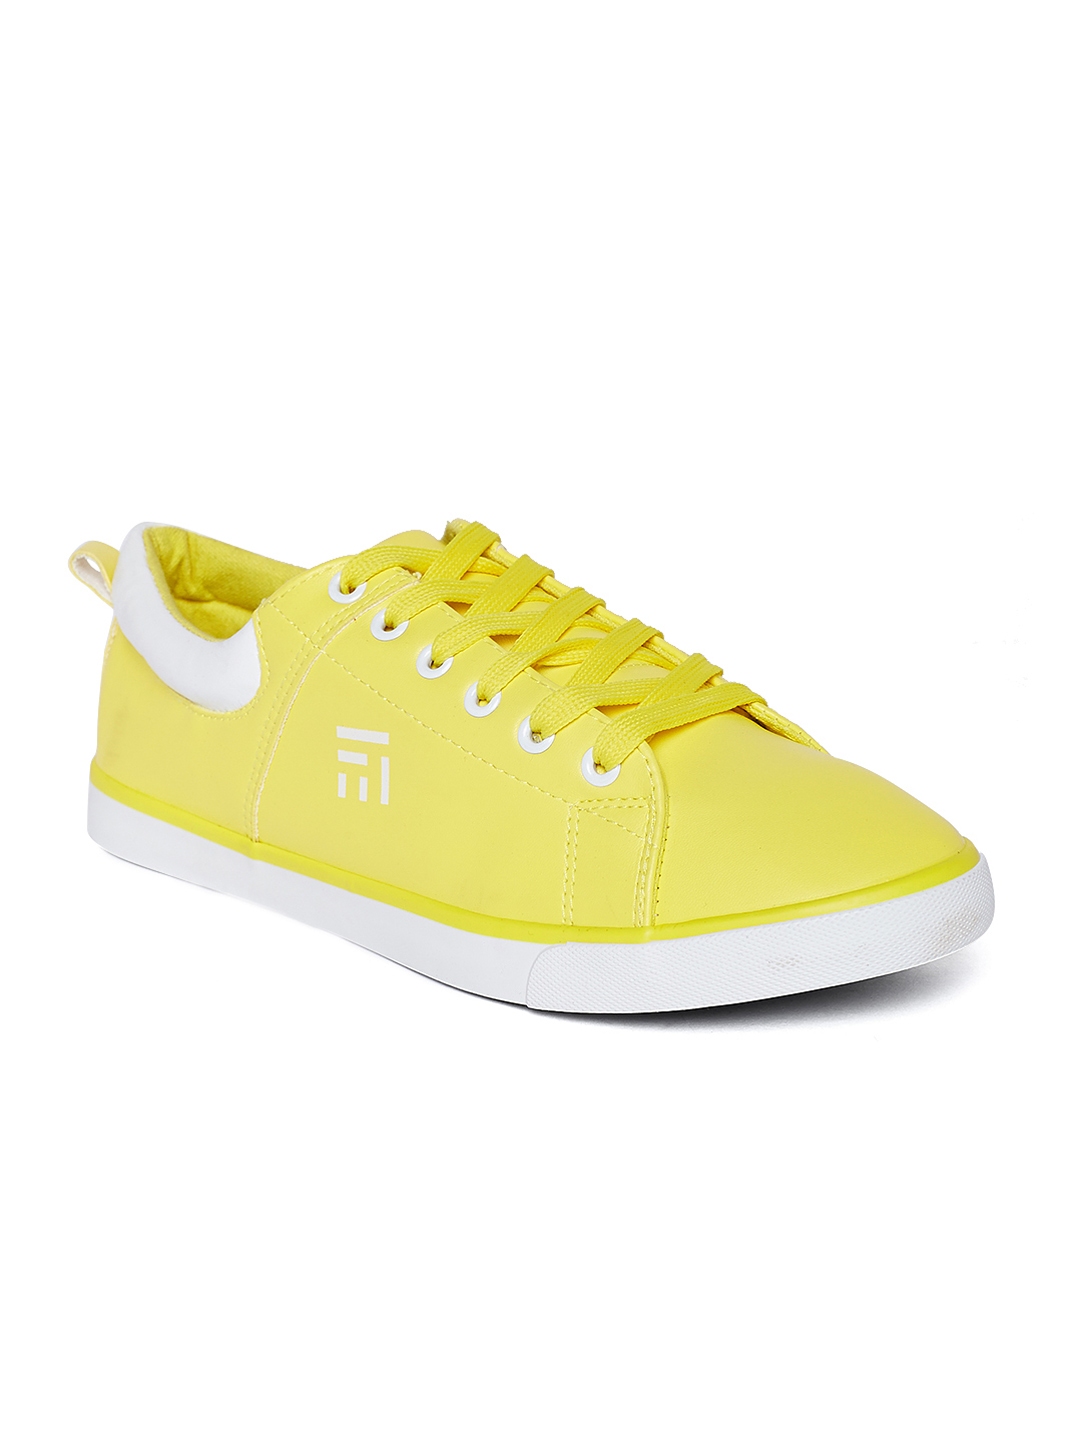 Buy Couch Potato Men Yellow Sneakers 